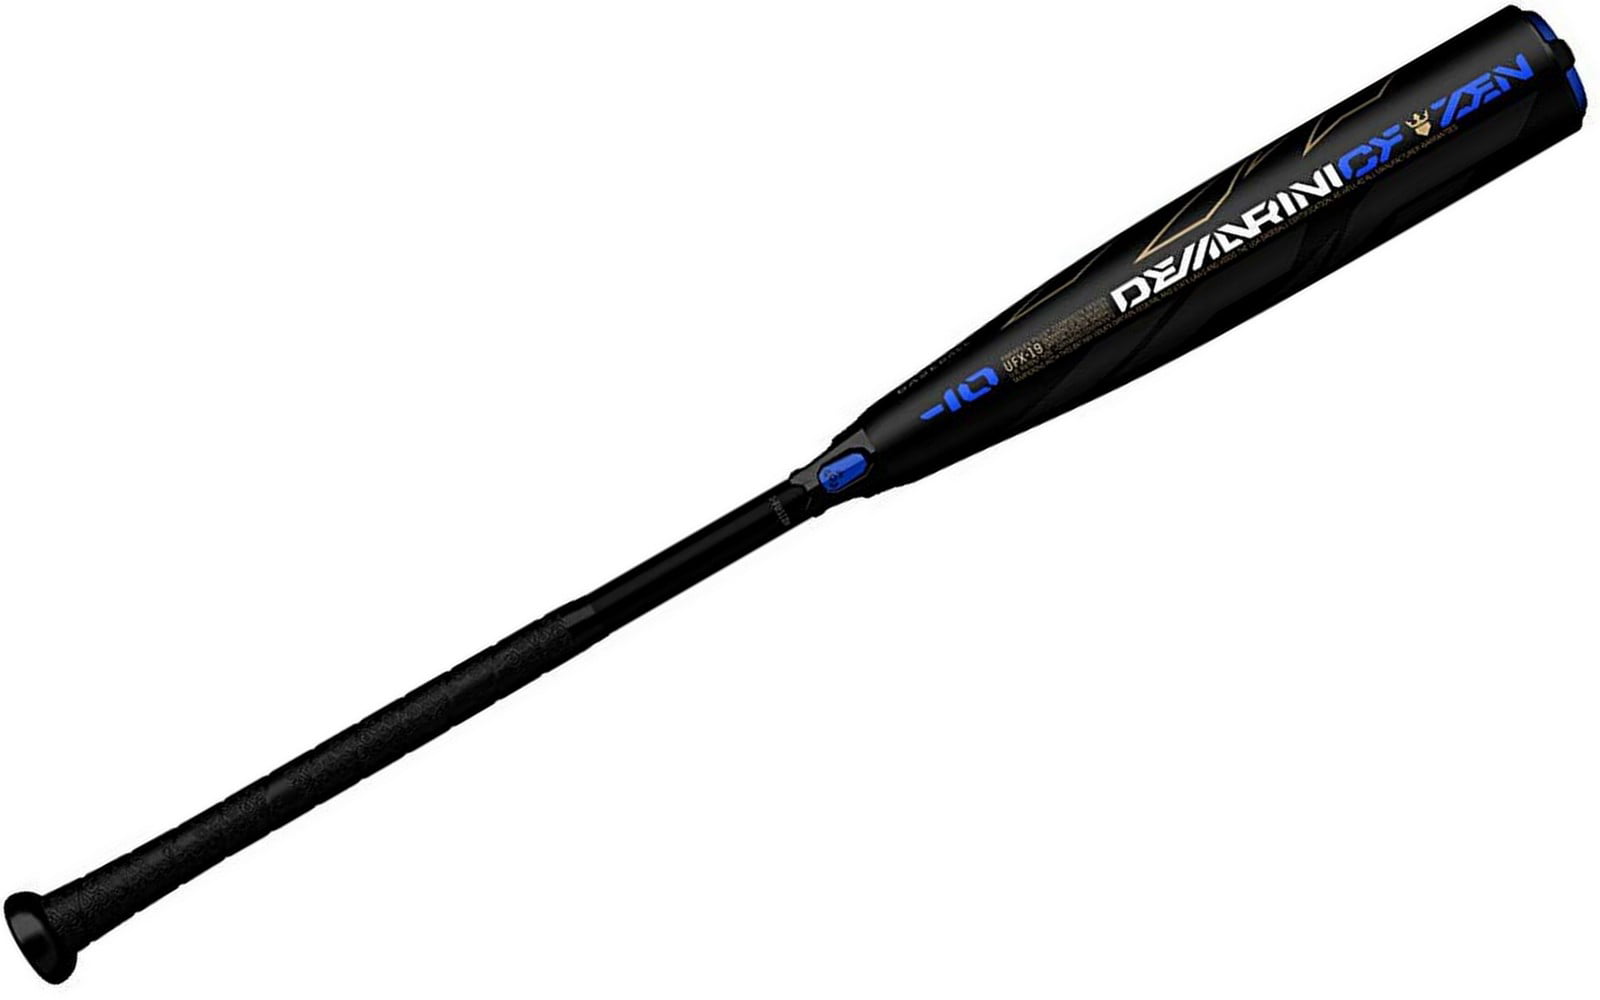 DeMarini 2019 CF Zen Balanced -10 2 5/8" Baseball Bat for sale online 